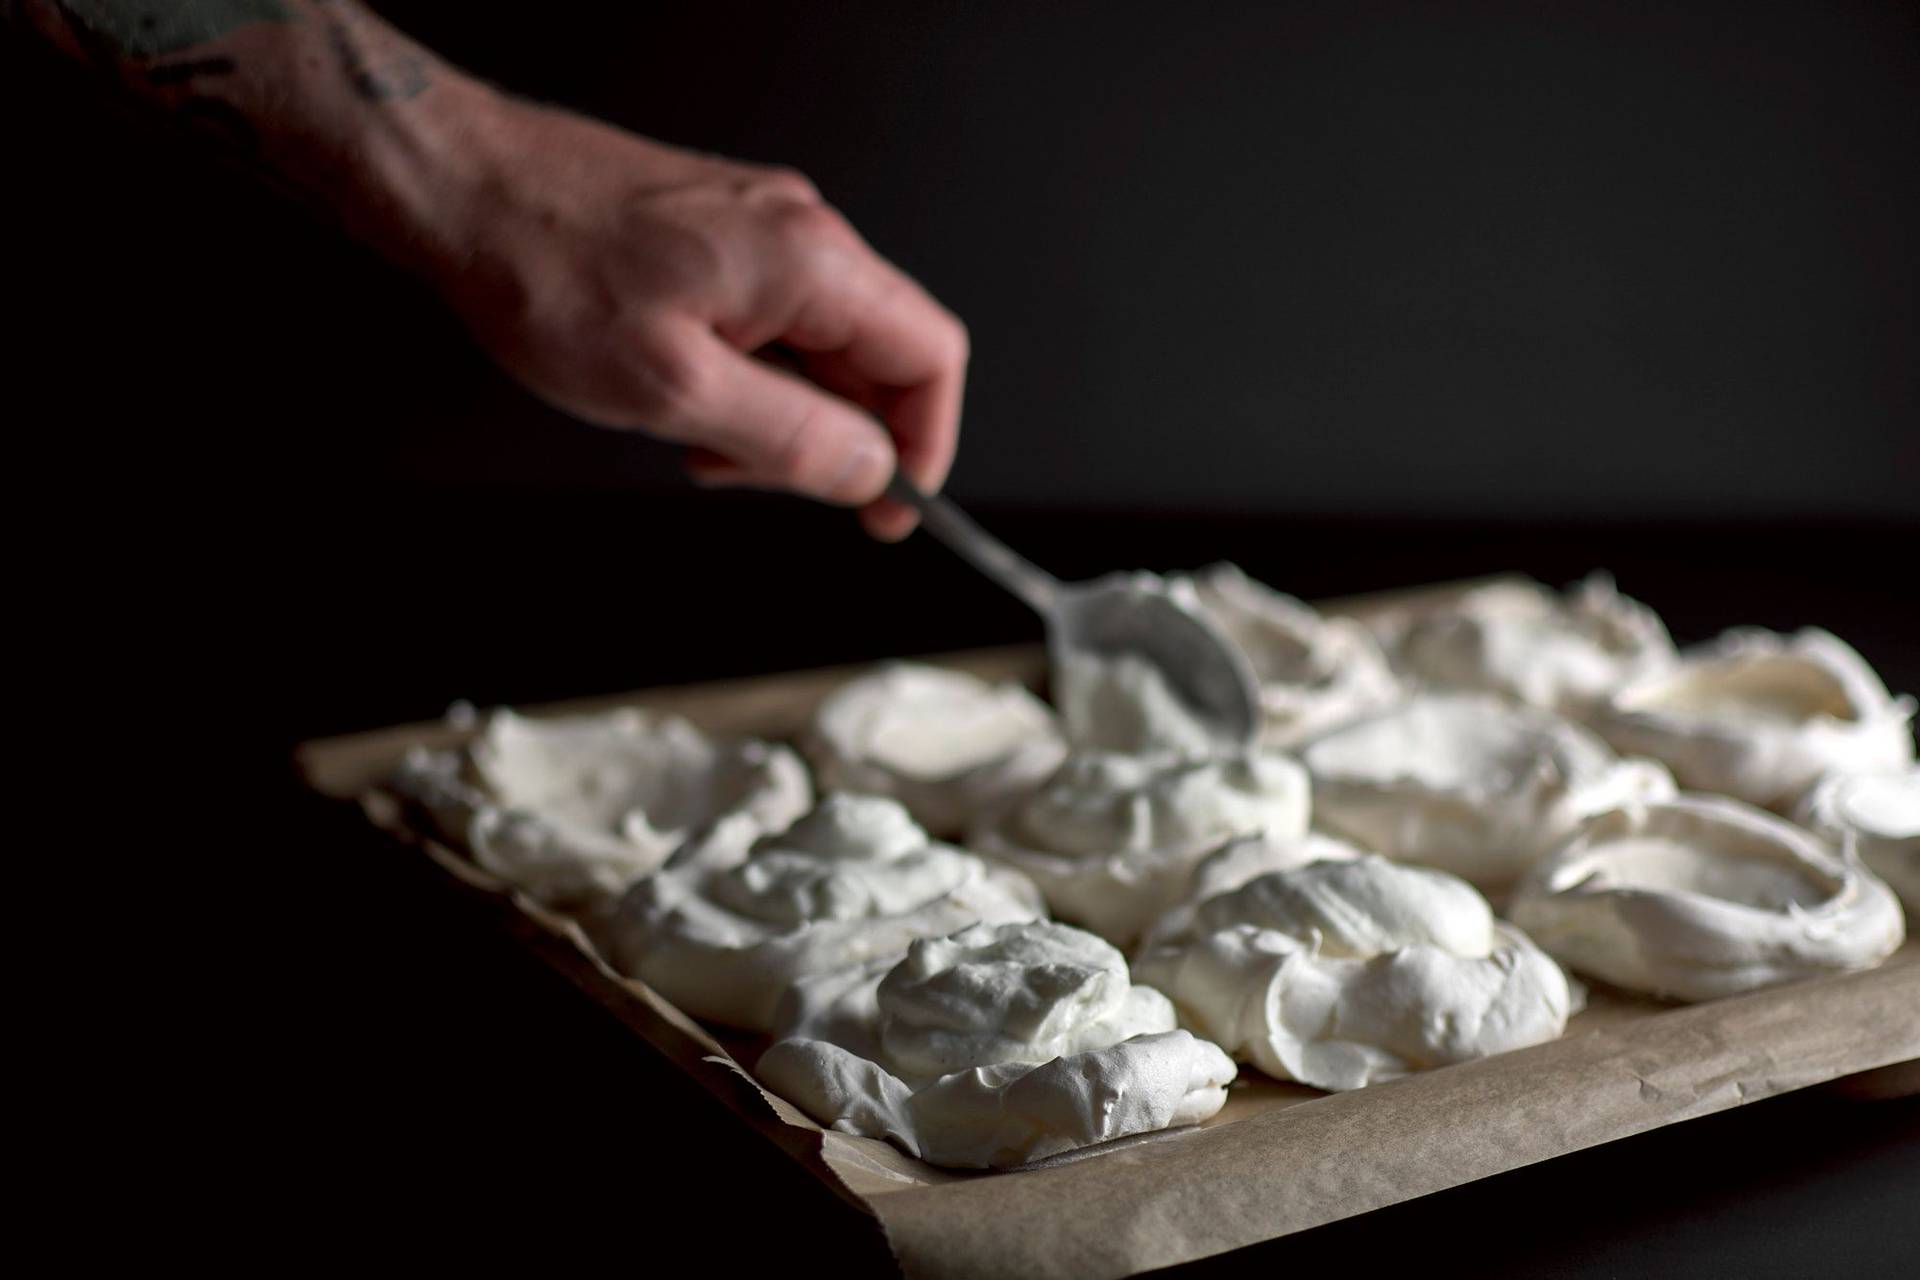 filling pavlova meringue shells on a baking sheet with black background